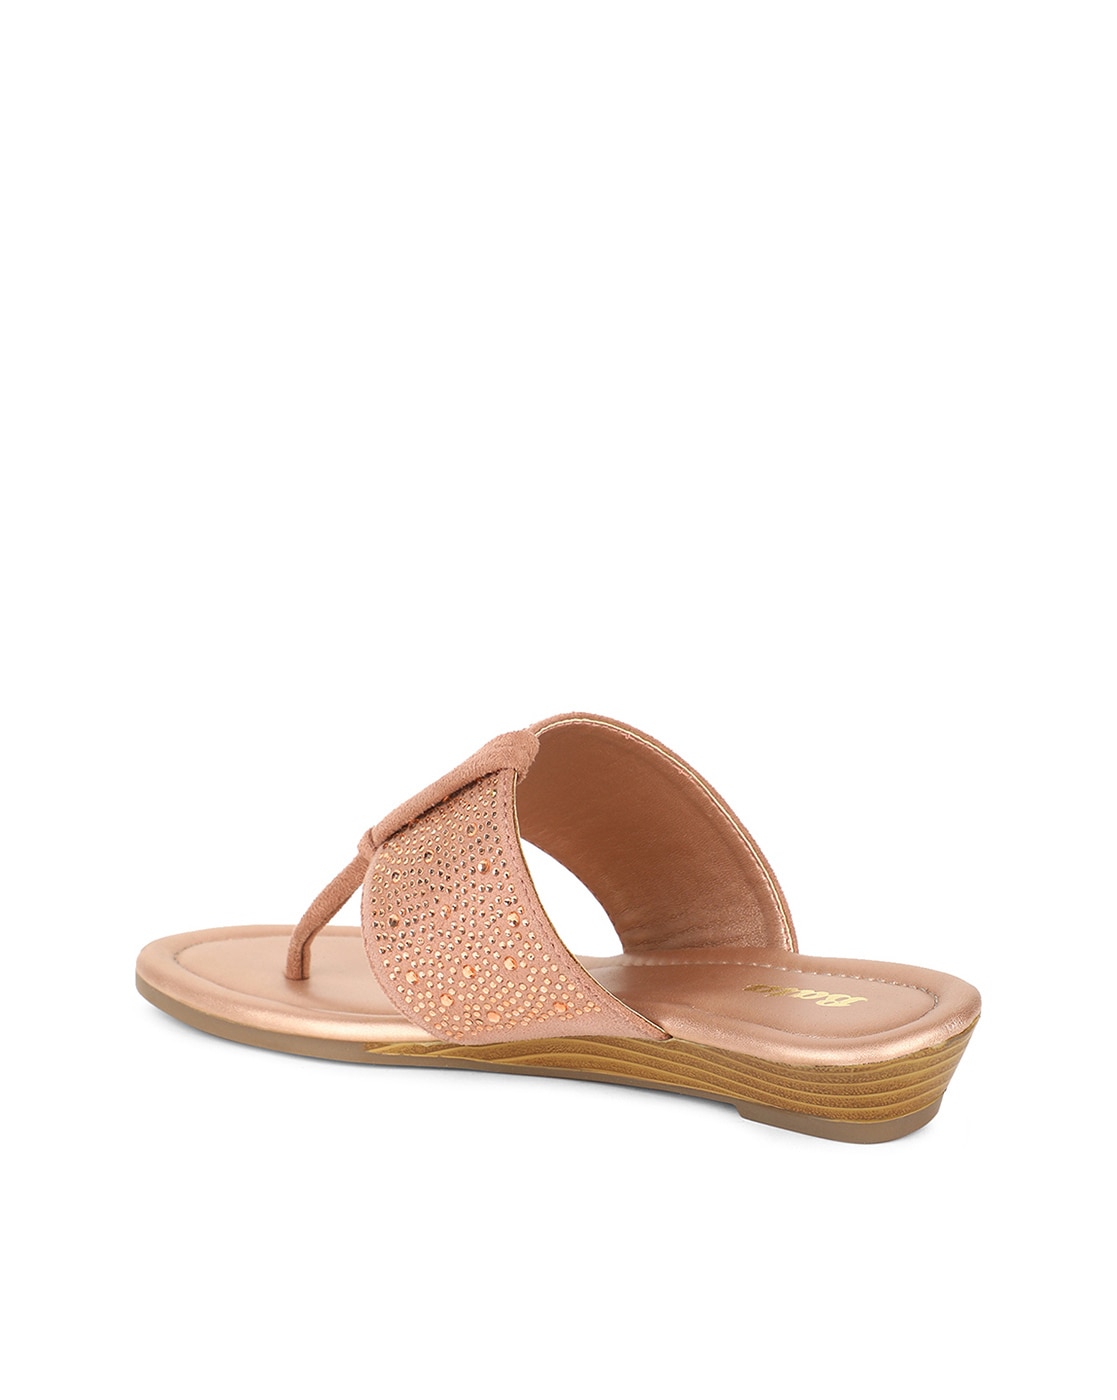 Buy BATA Comfit DIAMONTE E Beige Women Sandal 3 UK (6618142) at Amazon.in